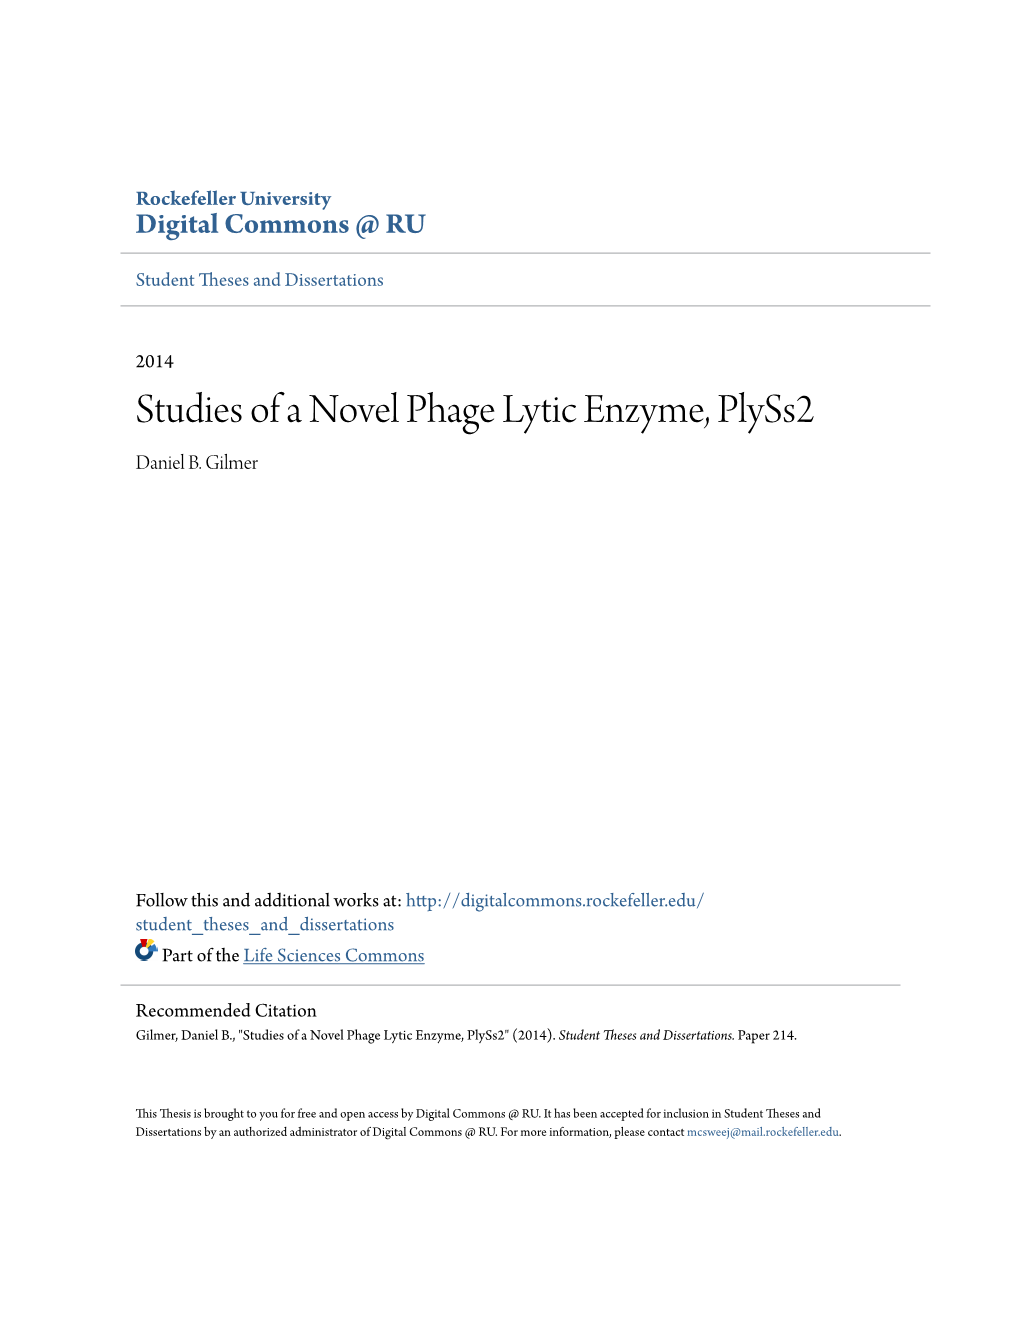 Studies of a Novel Phage Lytic Enzyme, Plyss2 Daniel B